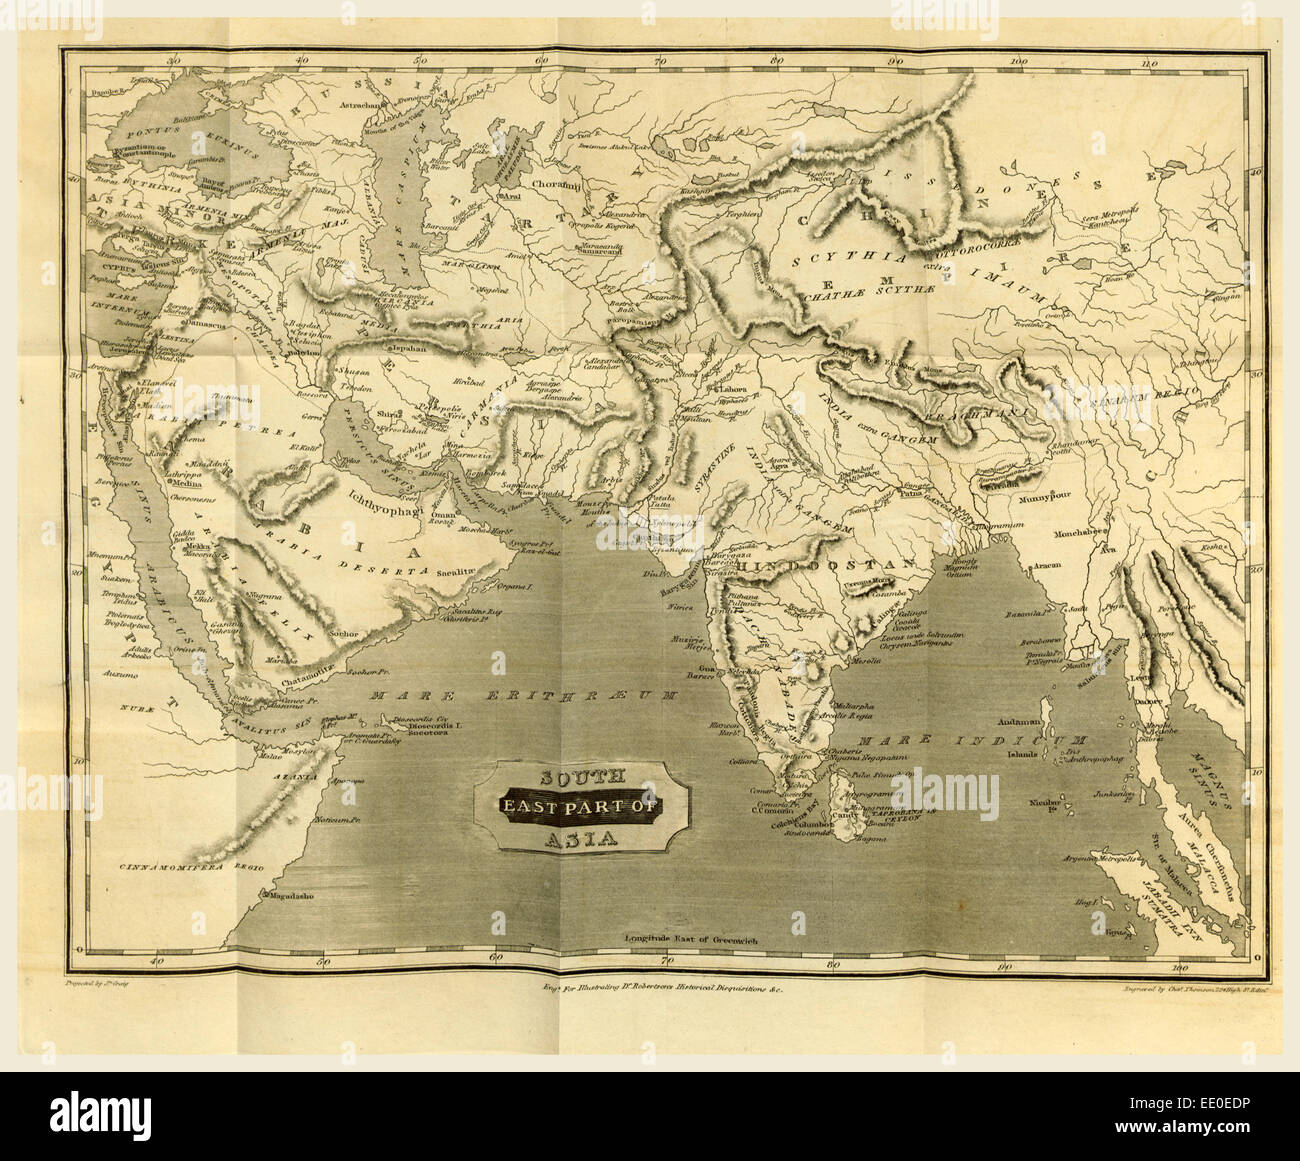 Lotus South Asia Map Decorated Silver Case – Designer Unique Finds